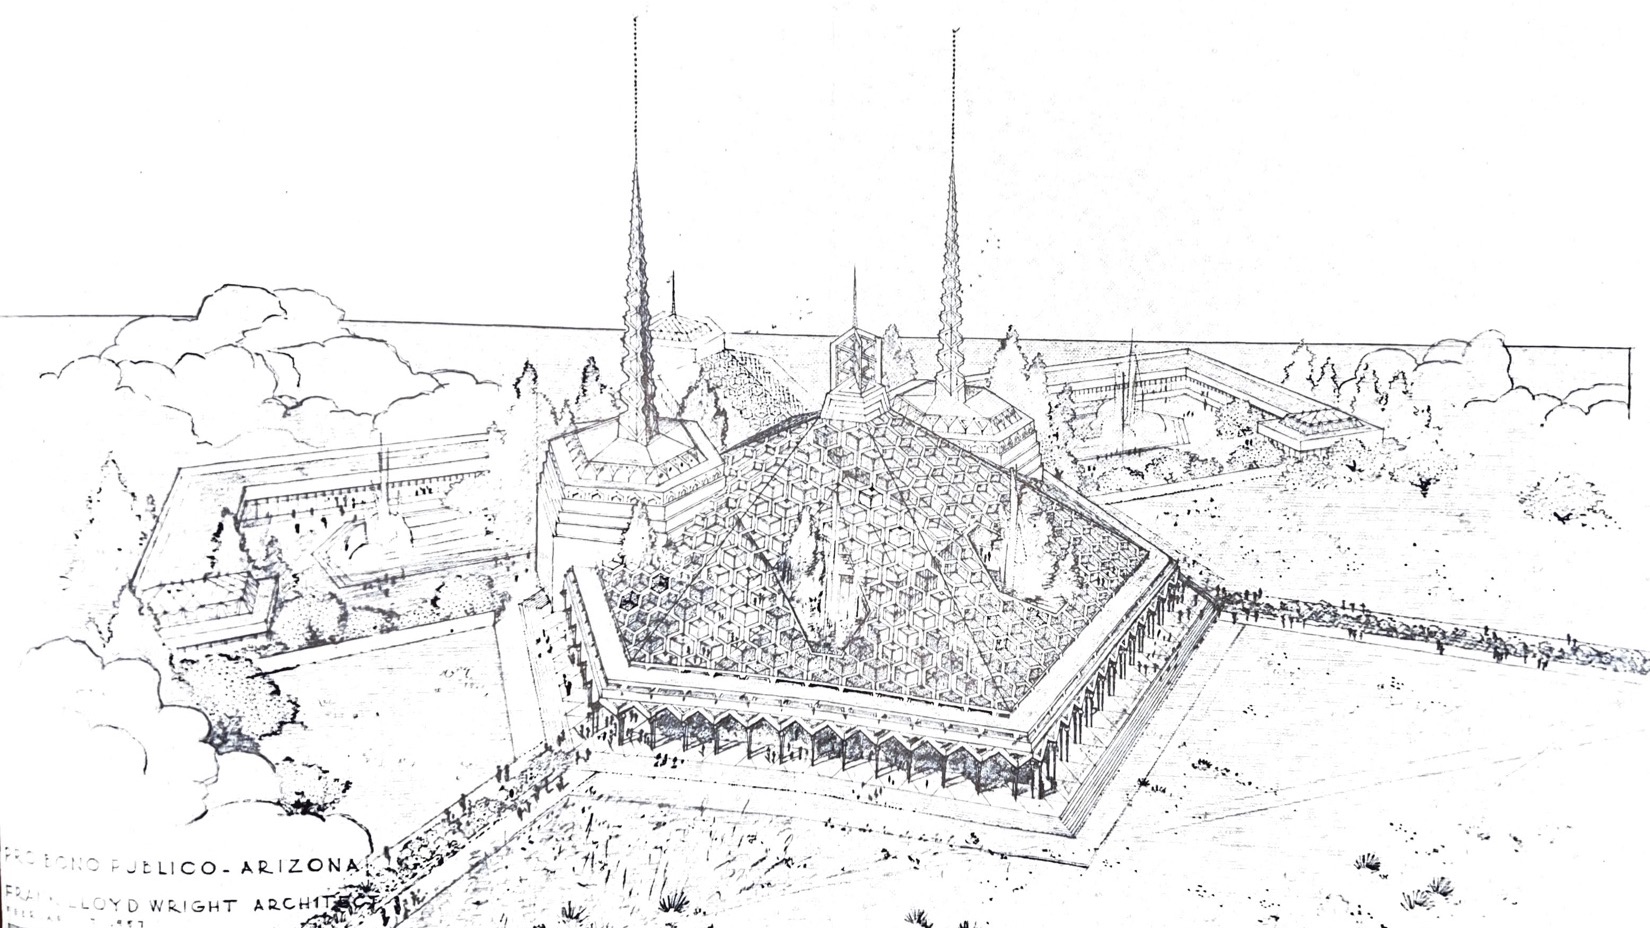 Frank Lloyd Wright's vision for Arizona's capitol